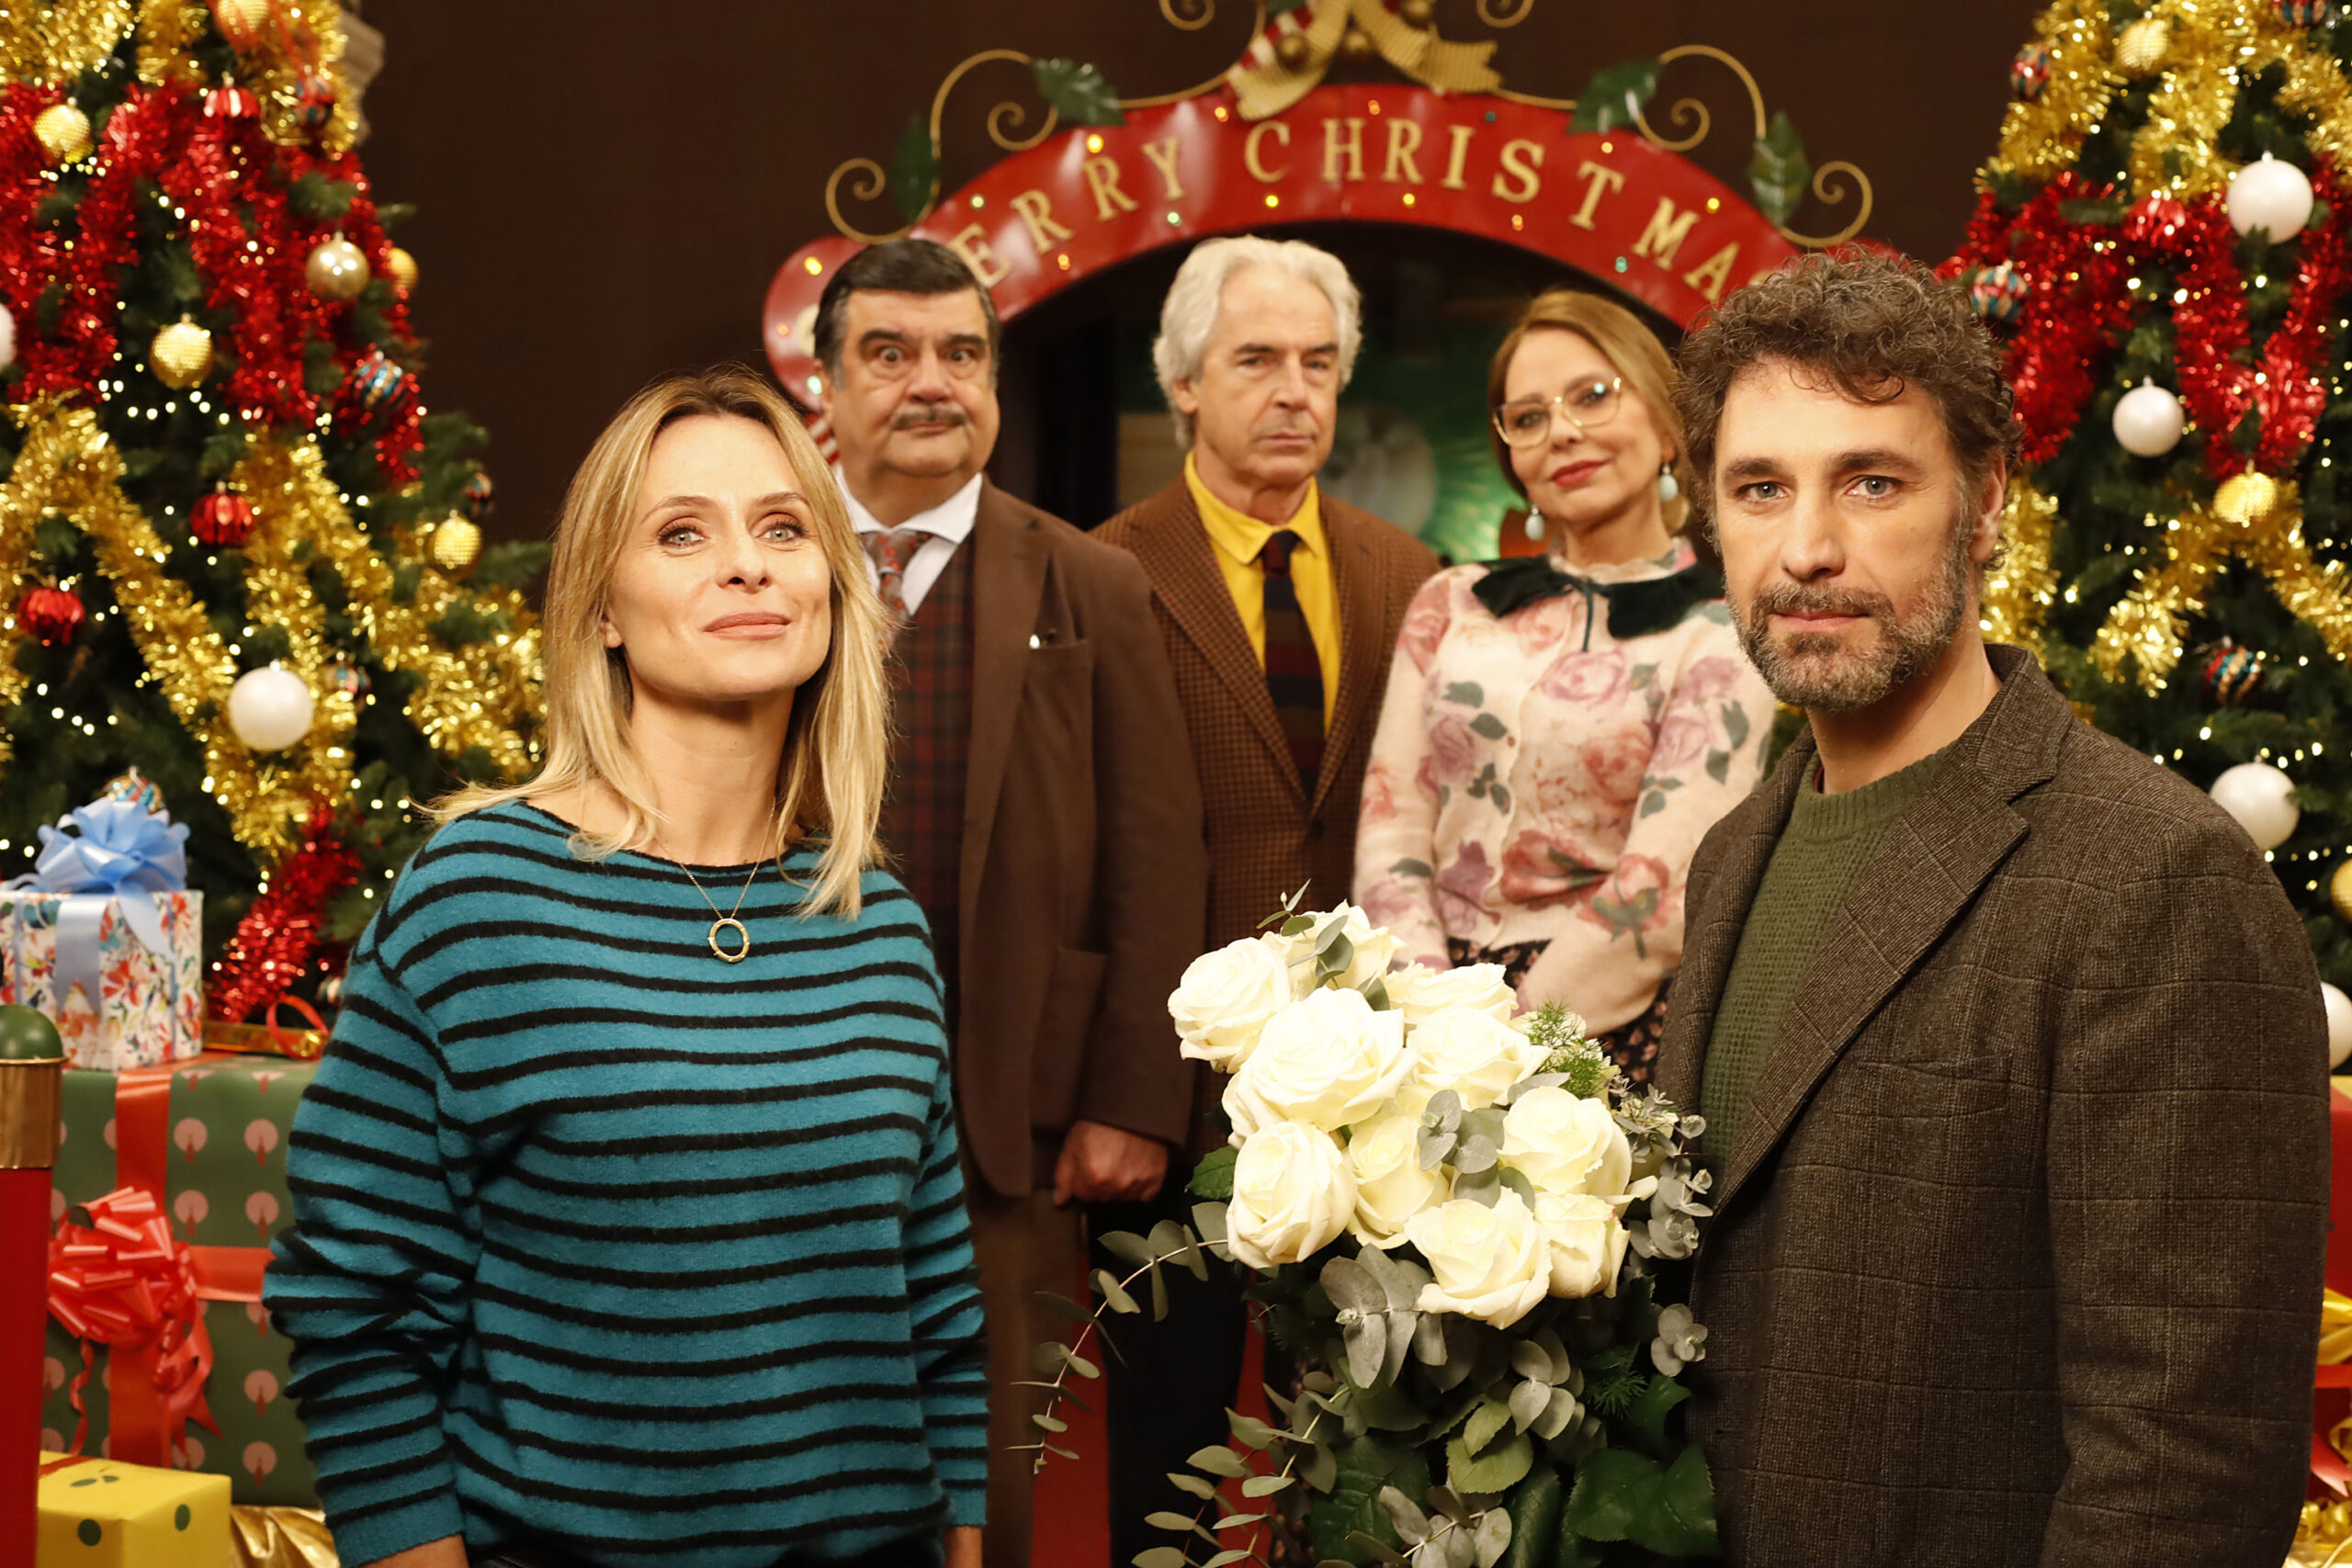 The Christmas Show [credit: courtesy of Ufficio Stampa film]